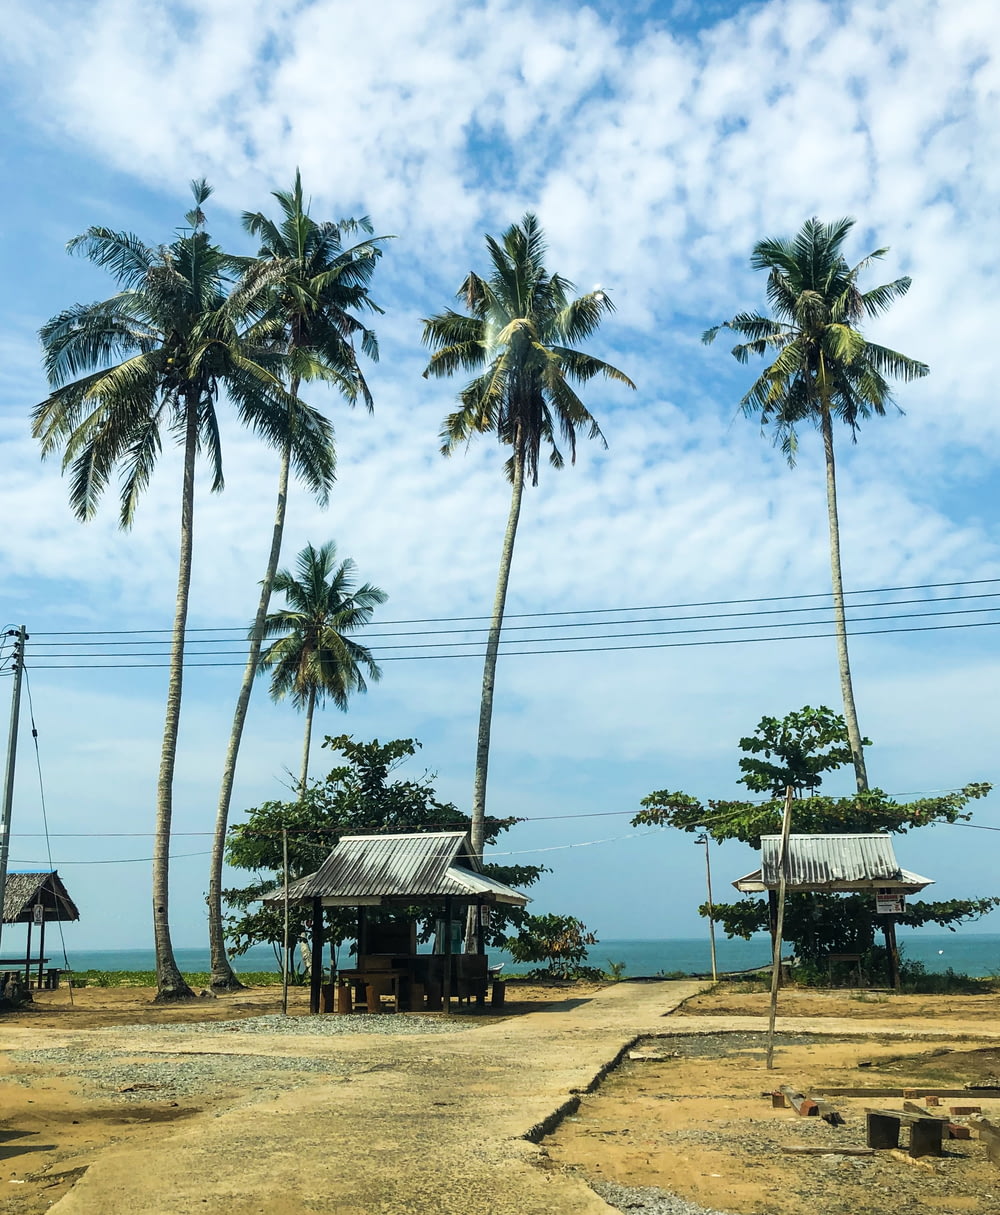 grey gazebo beside coconut trees during daytime